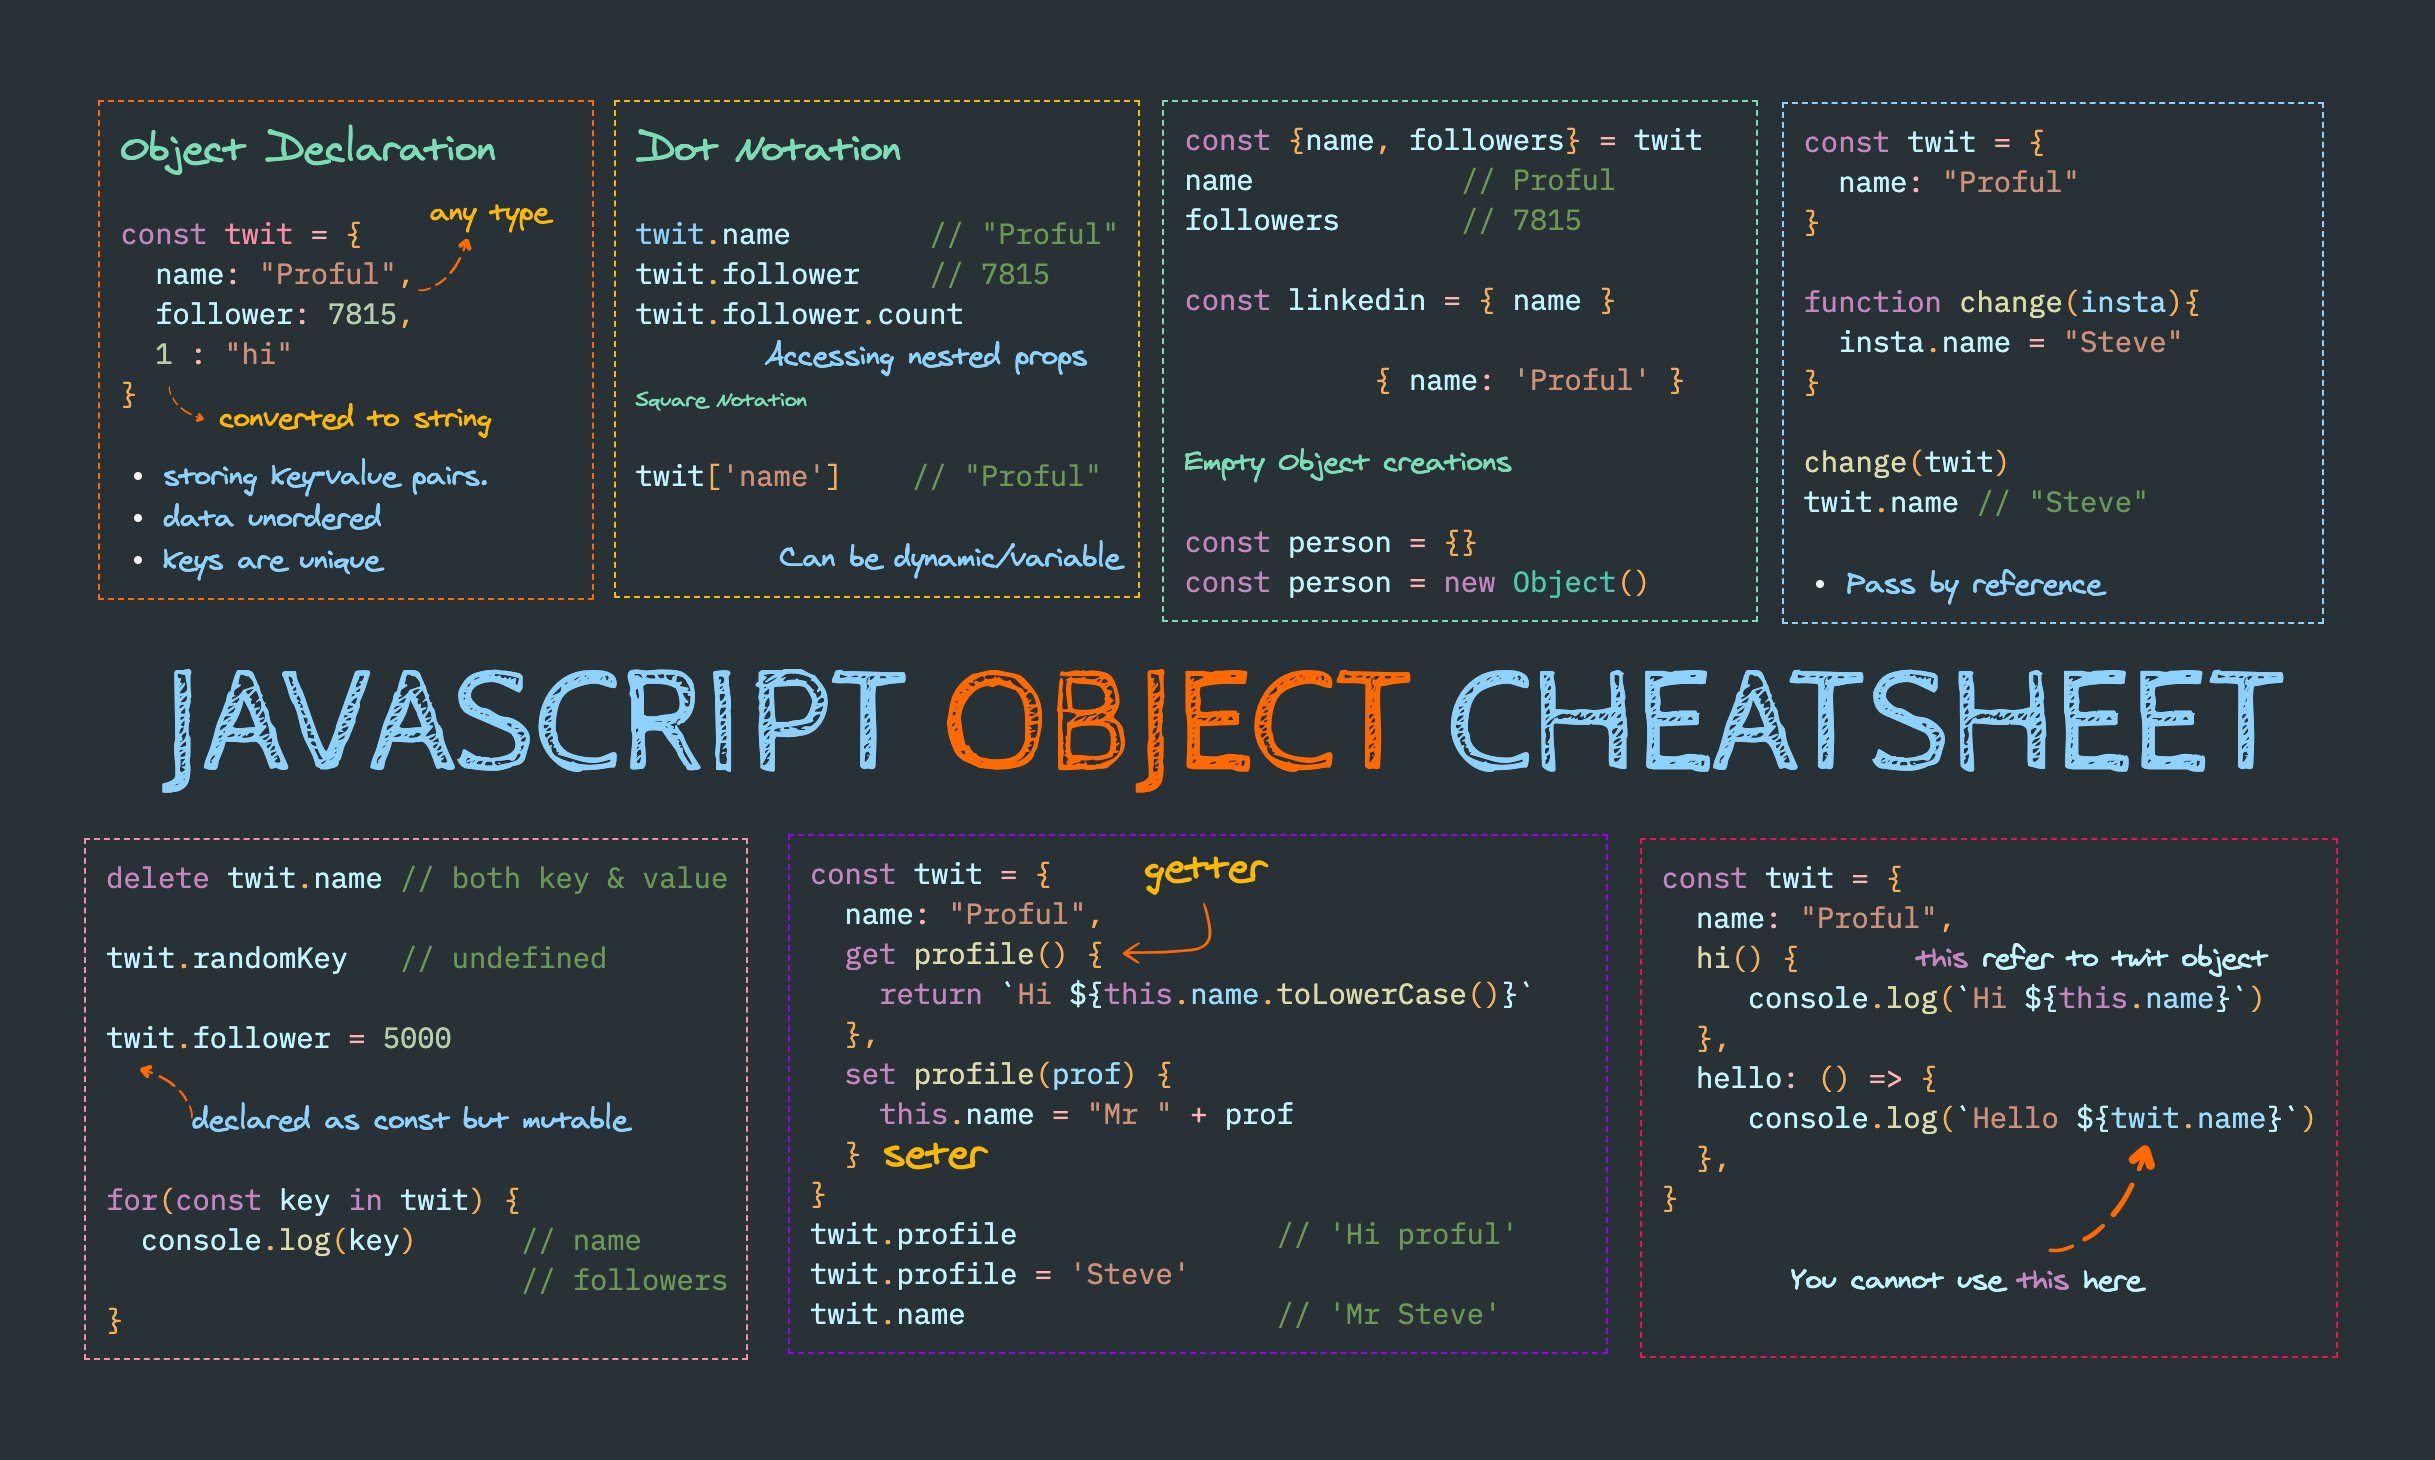 The Javascript Object Cheat Sheet